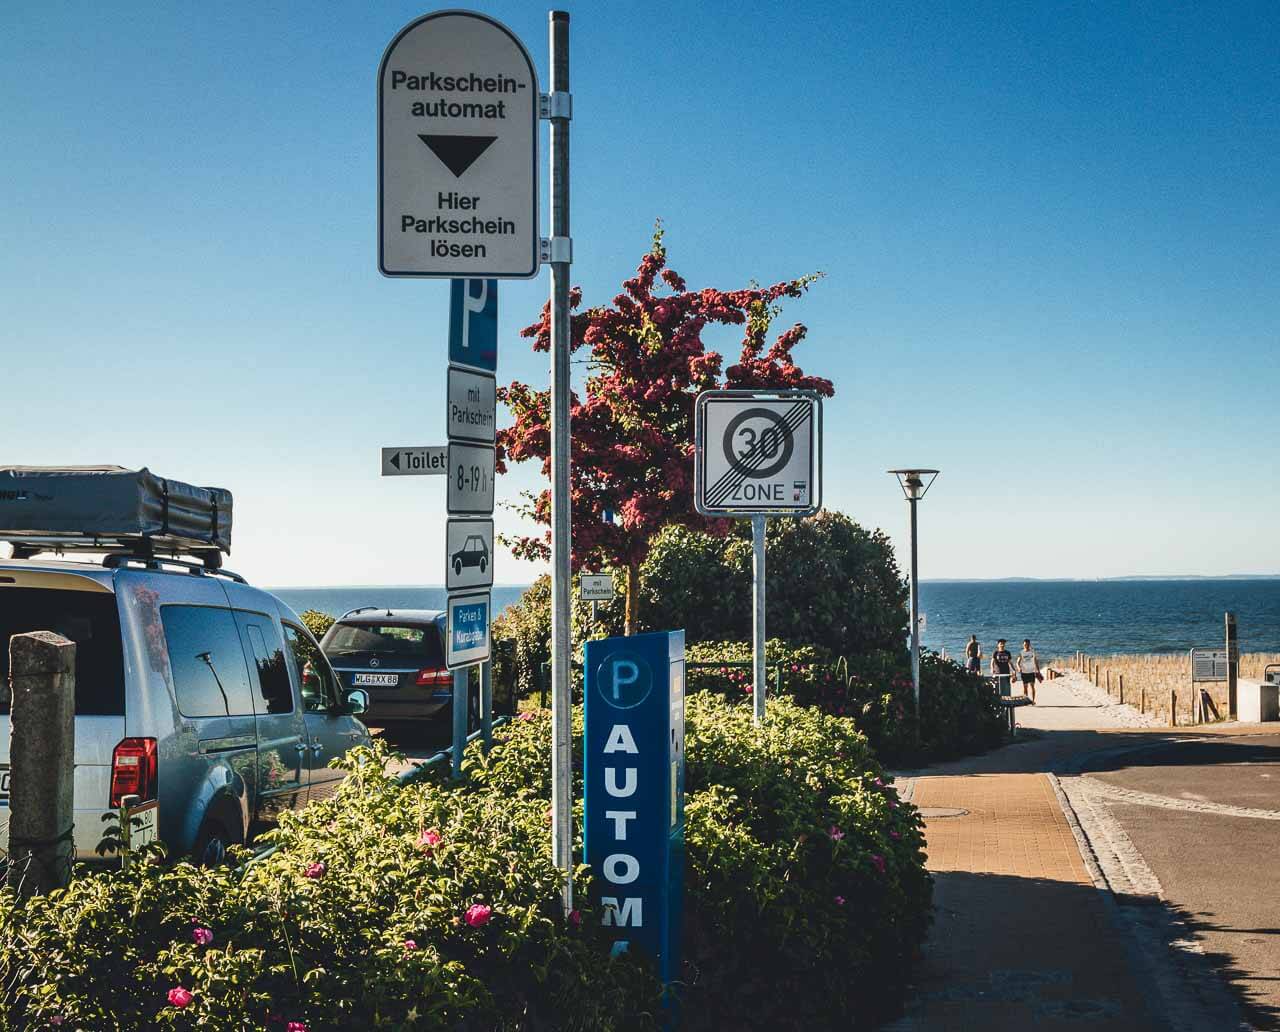 Parken in Lubmin in Strandnähe ist selten kostenlos